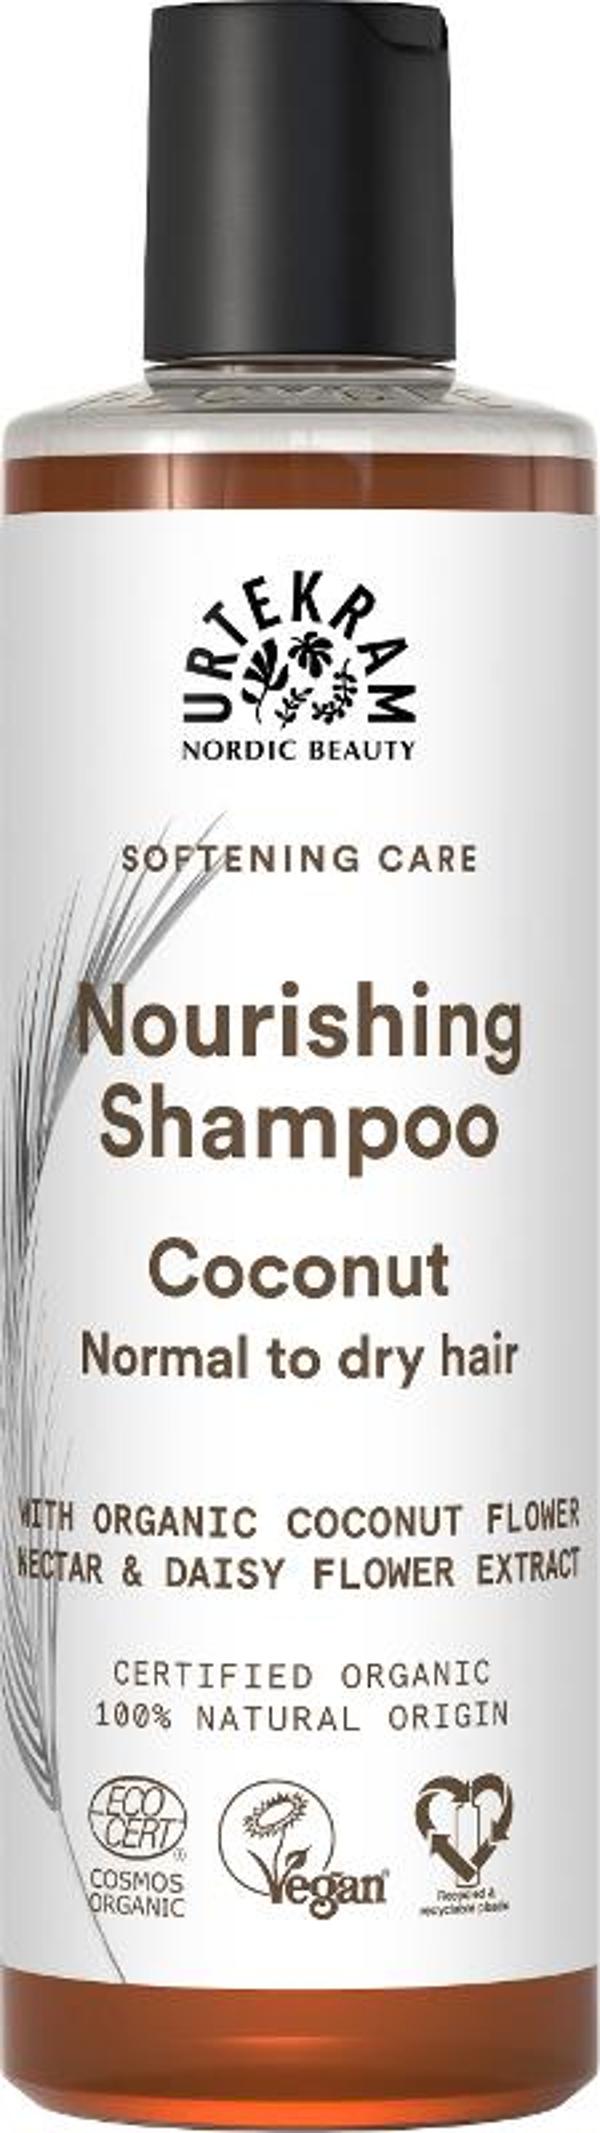 Produktfoto zu Kokos Shampoo 250ml